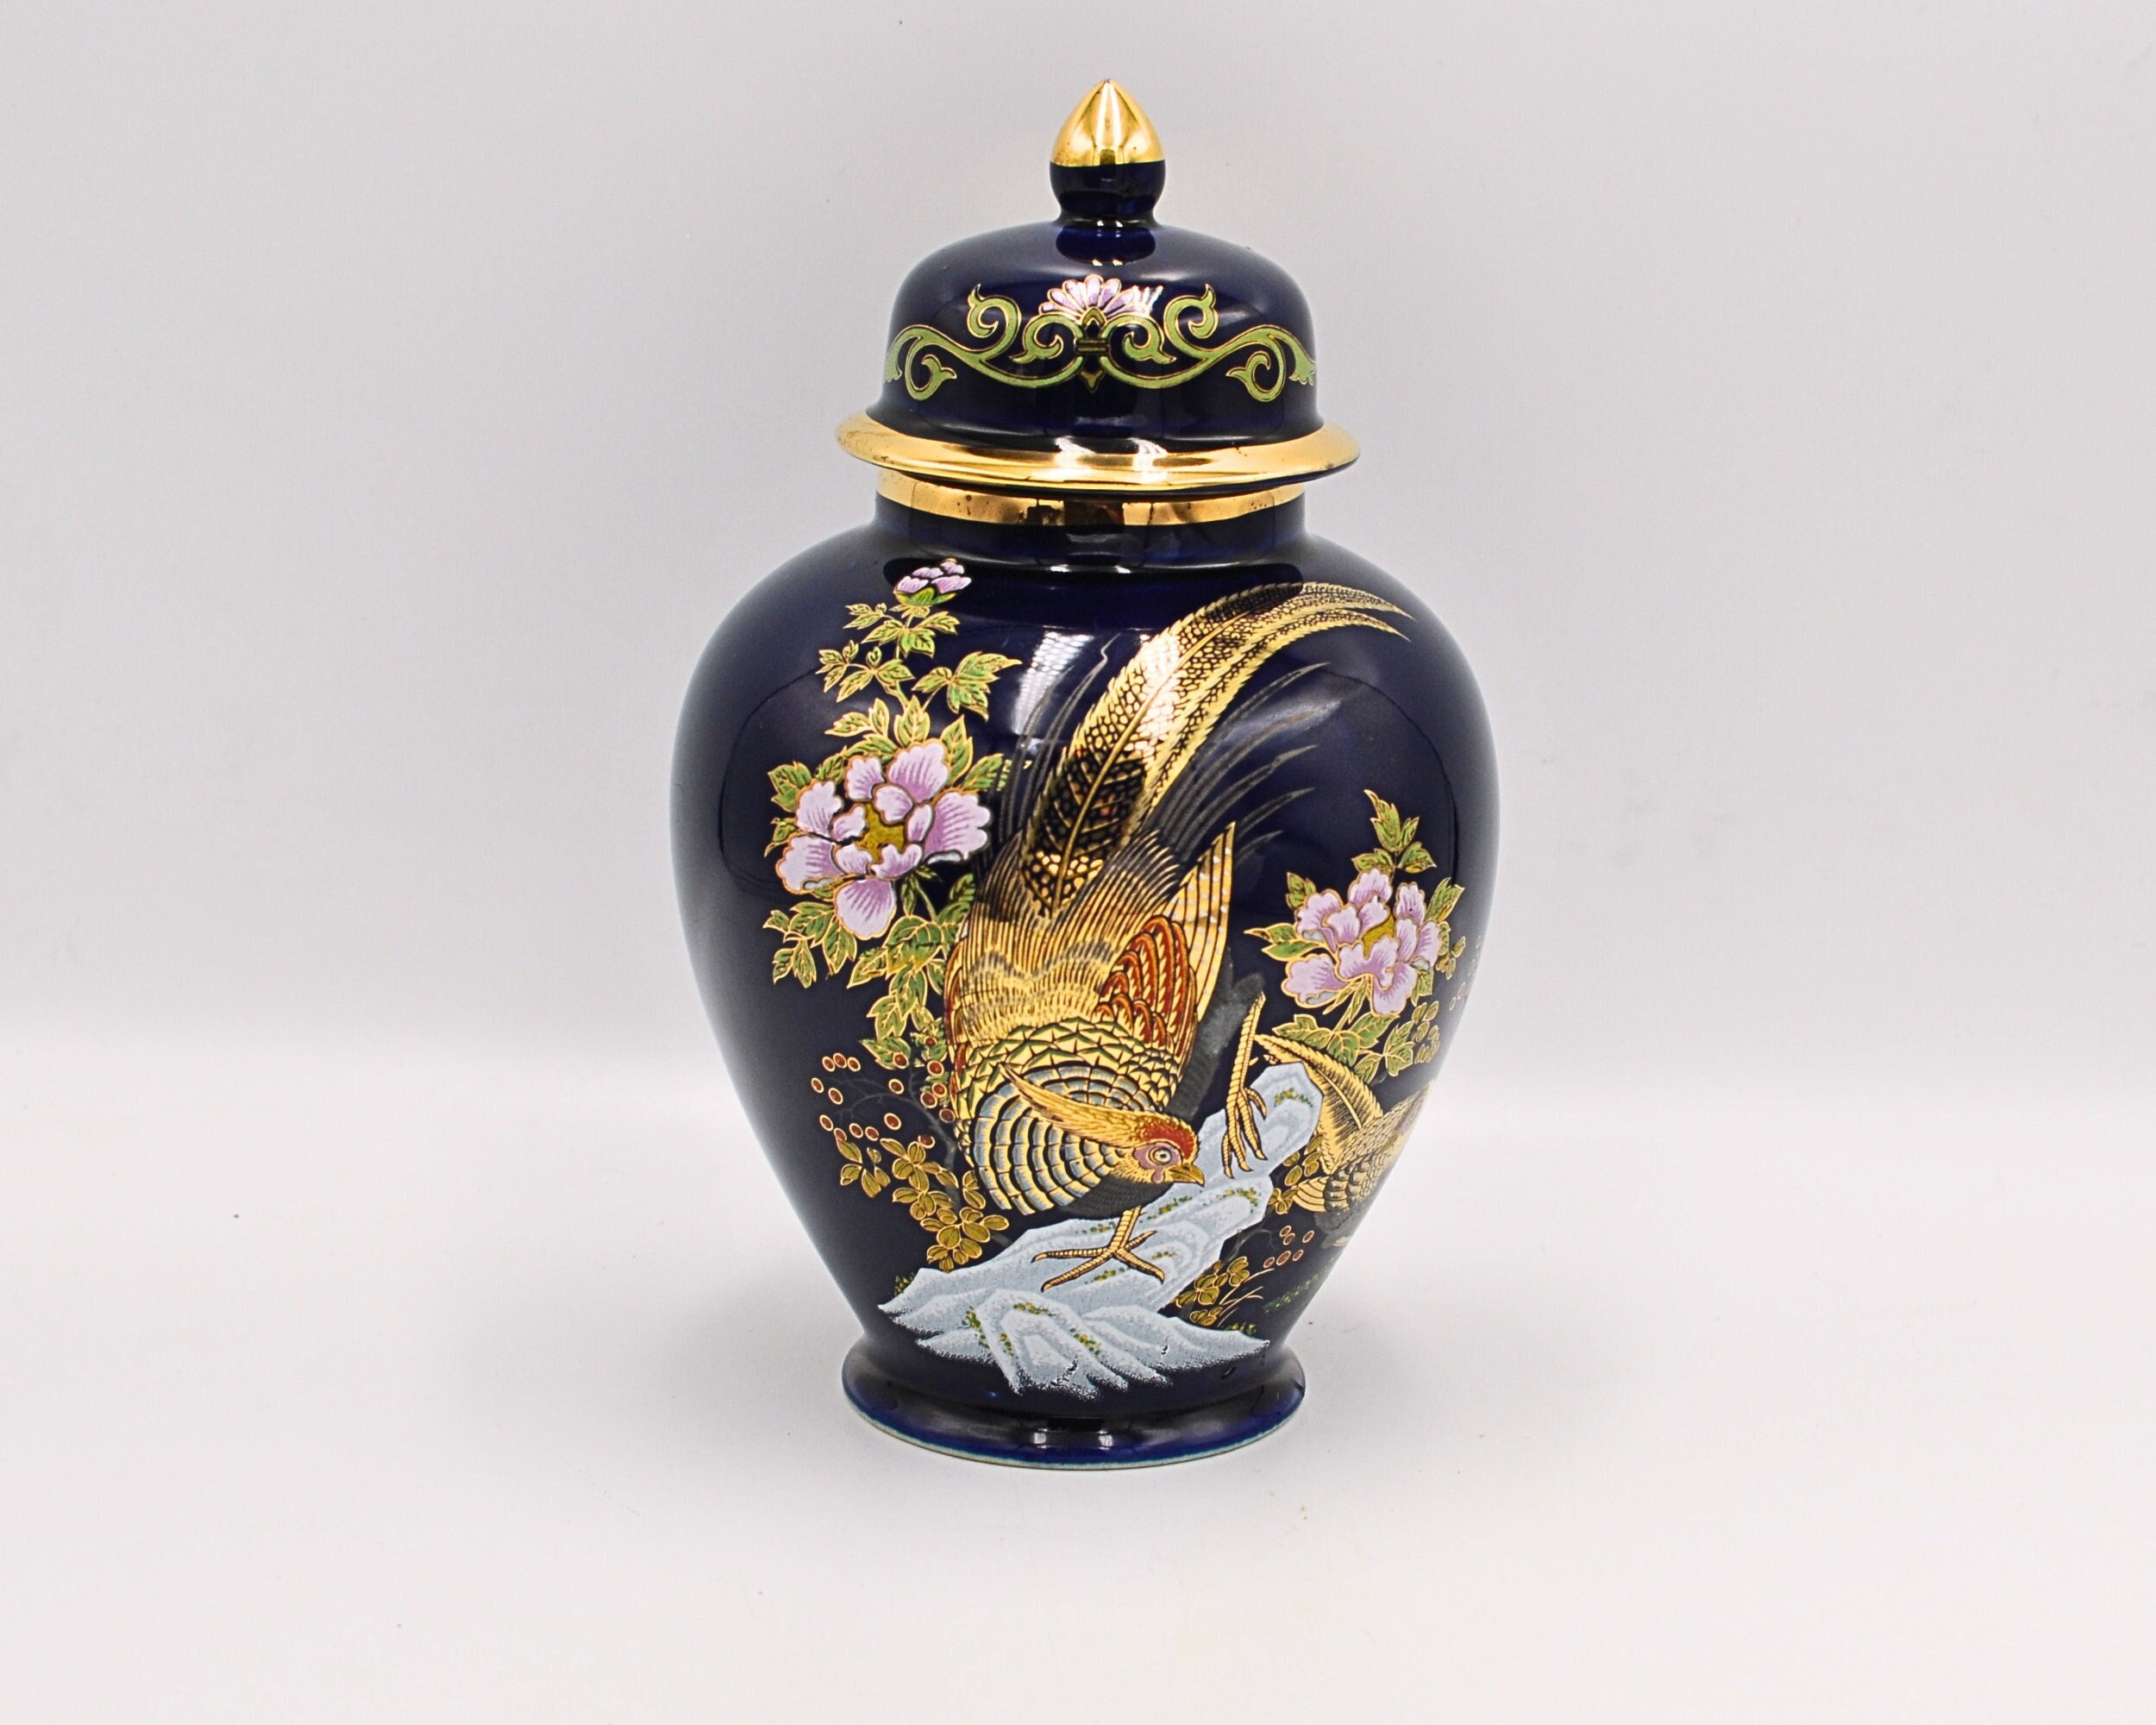 Pair of Vintage/Antique Japanese Cobalt Porcelain Satsuma Vases, 12 3/4”  Tall